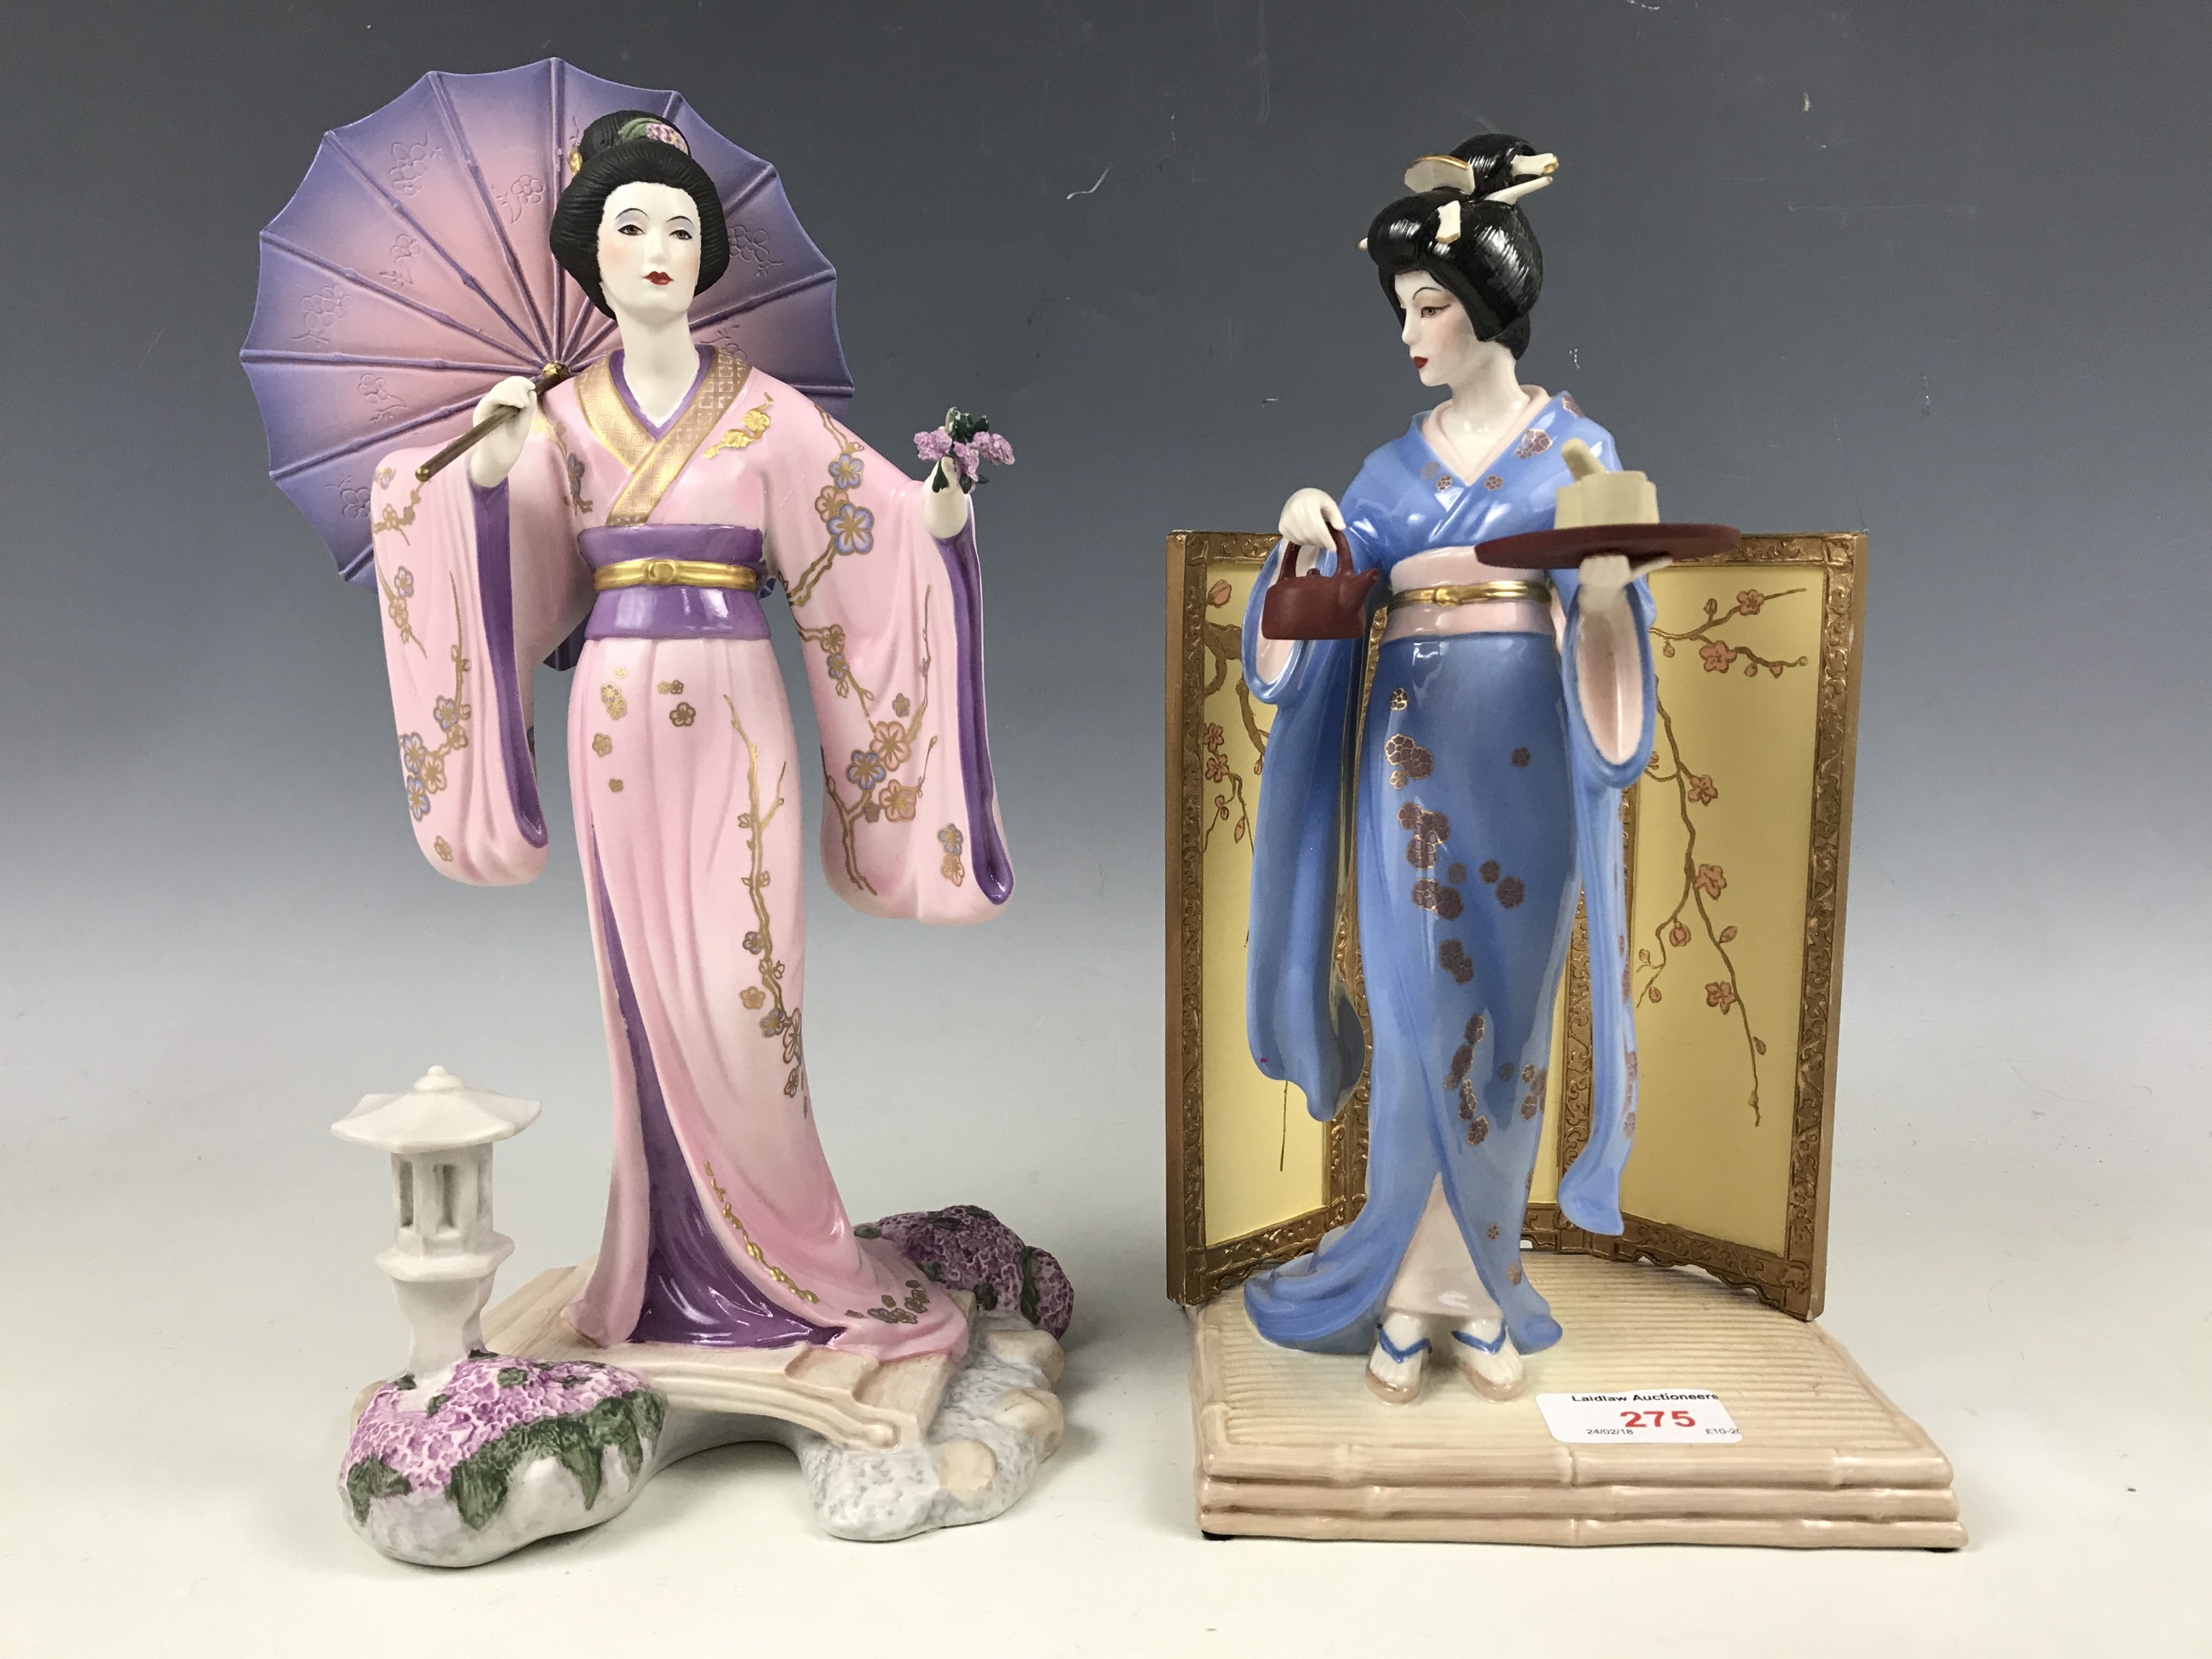 Two Japanese ceramic figurines modelled as Yoshiko and Tamiko